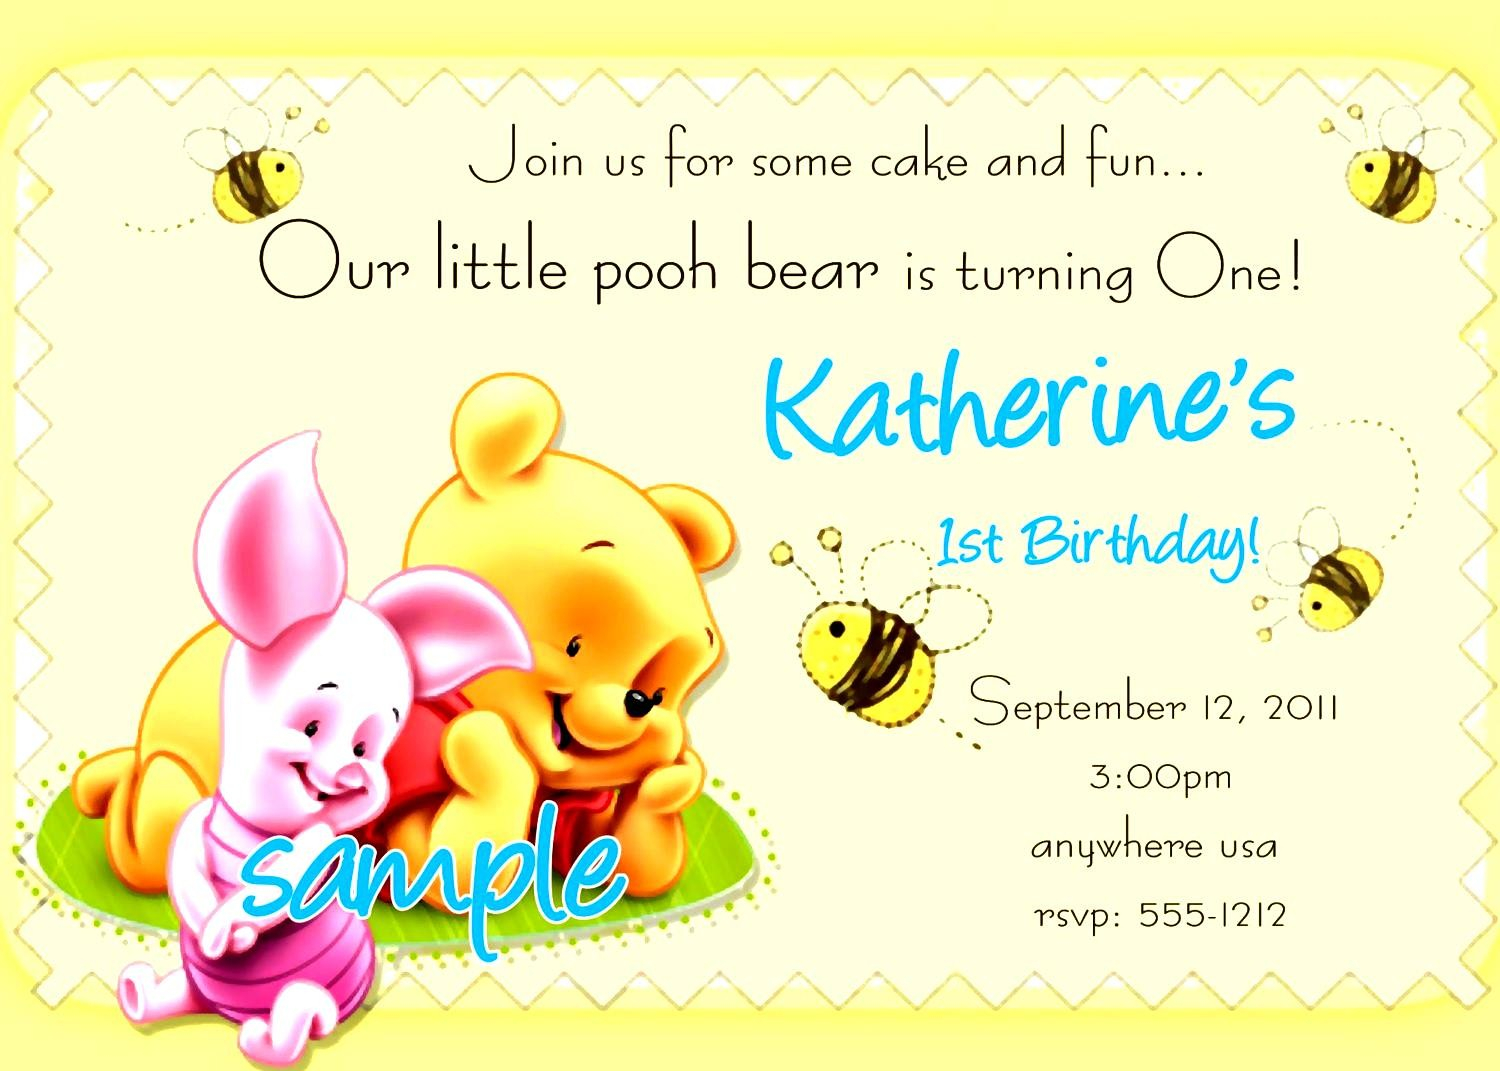 Kids Birthday Card Ideas Party Invitations Cards Kids Birthday Party Invitations Unique